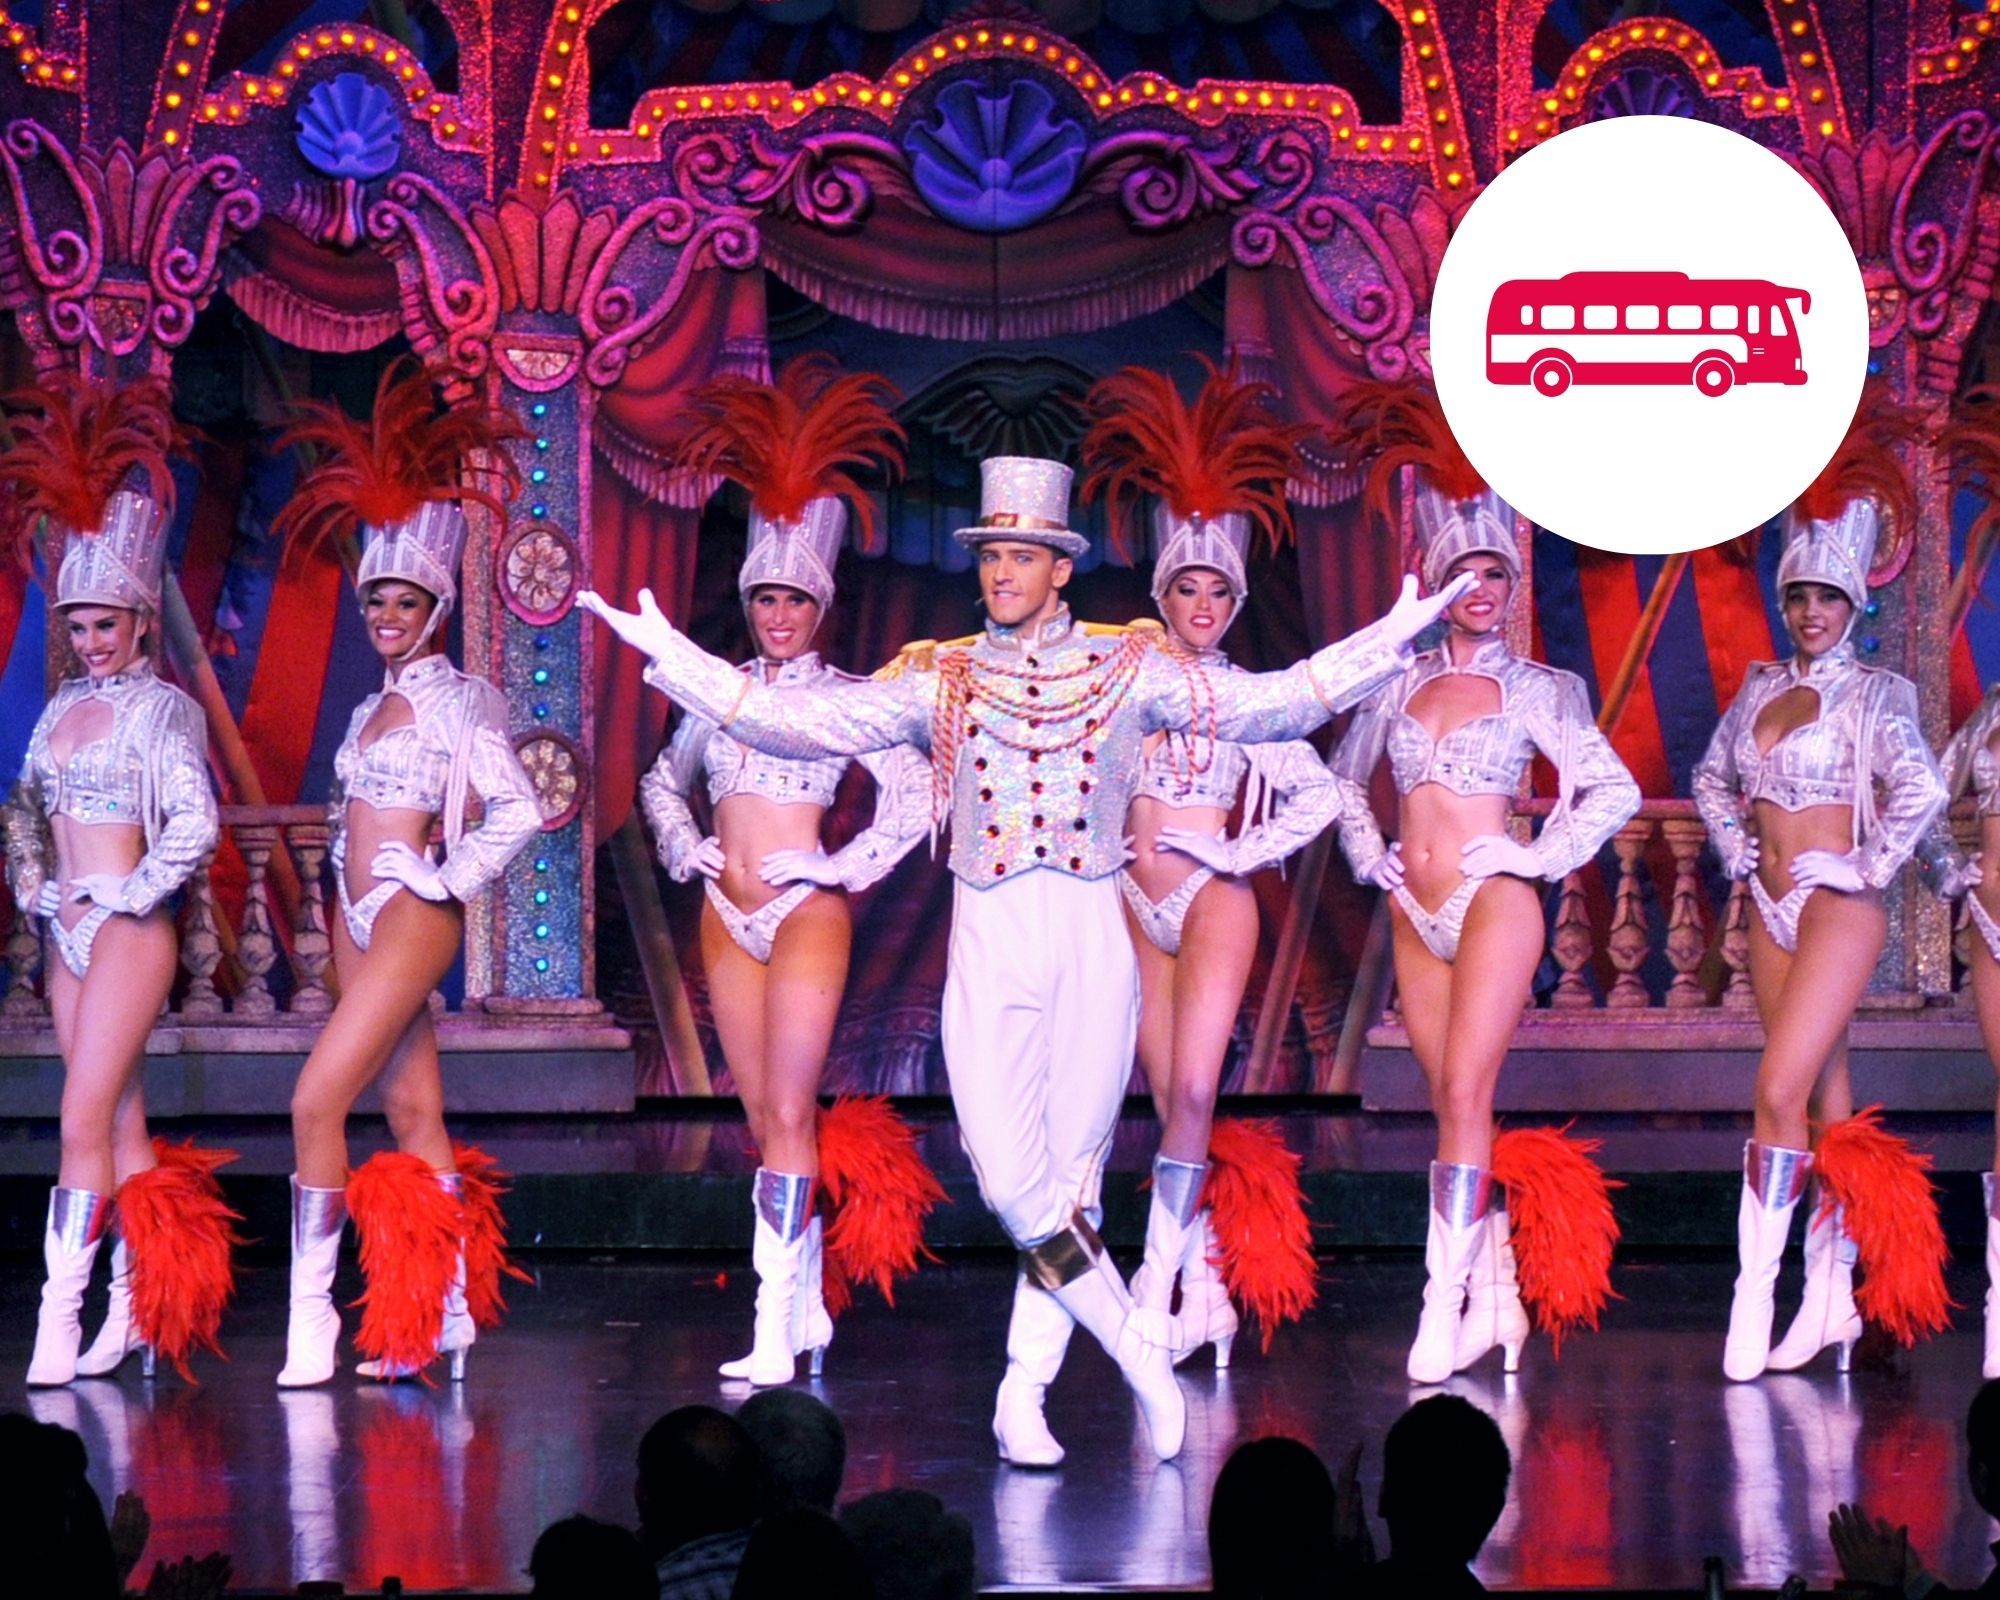 Moulin Rouge fantastic show